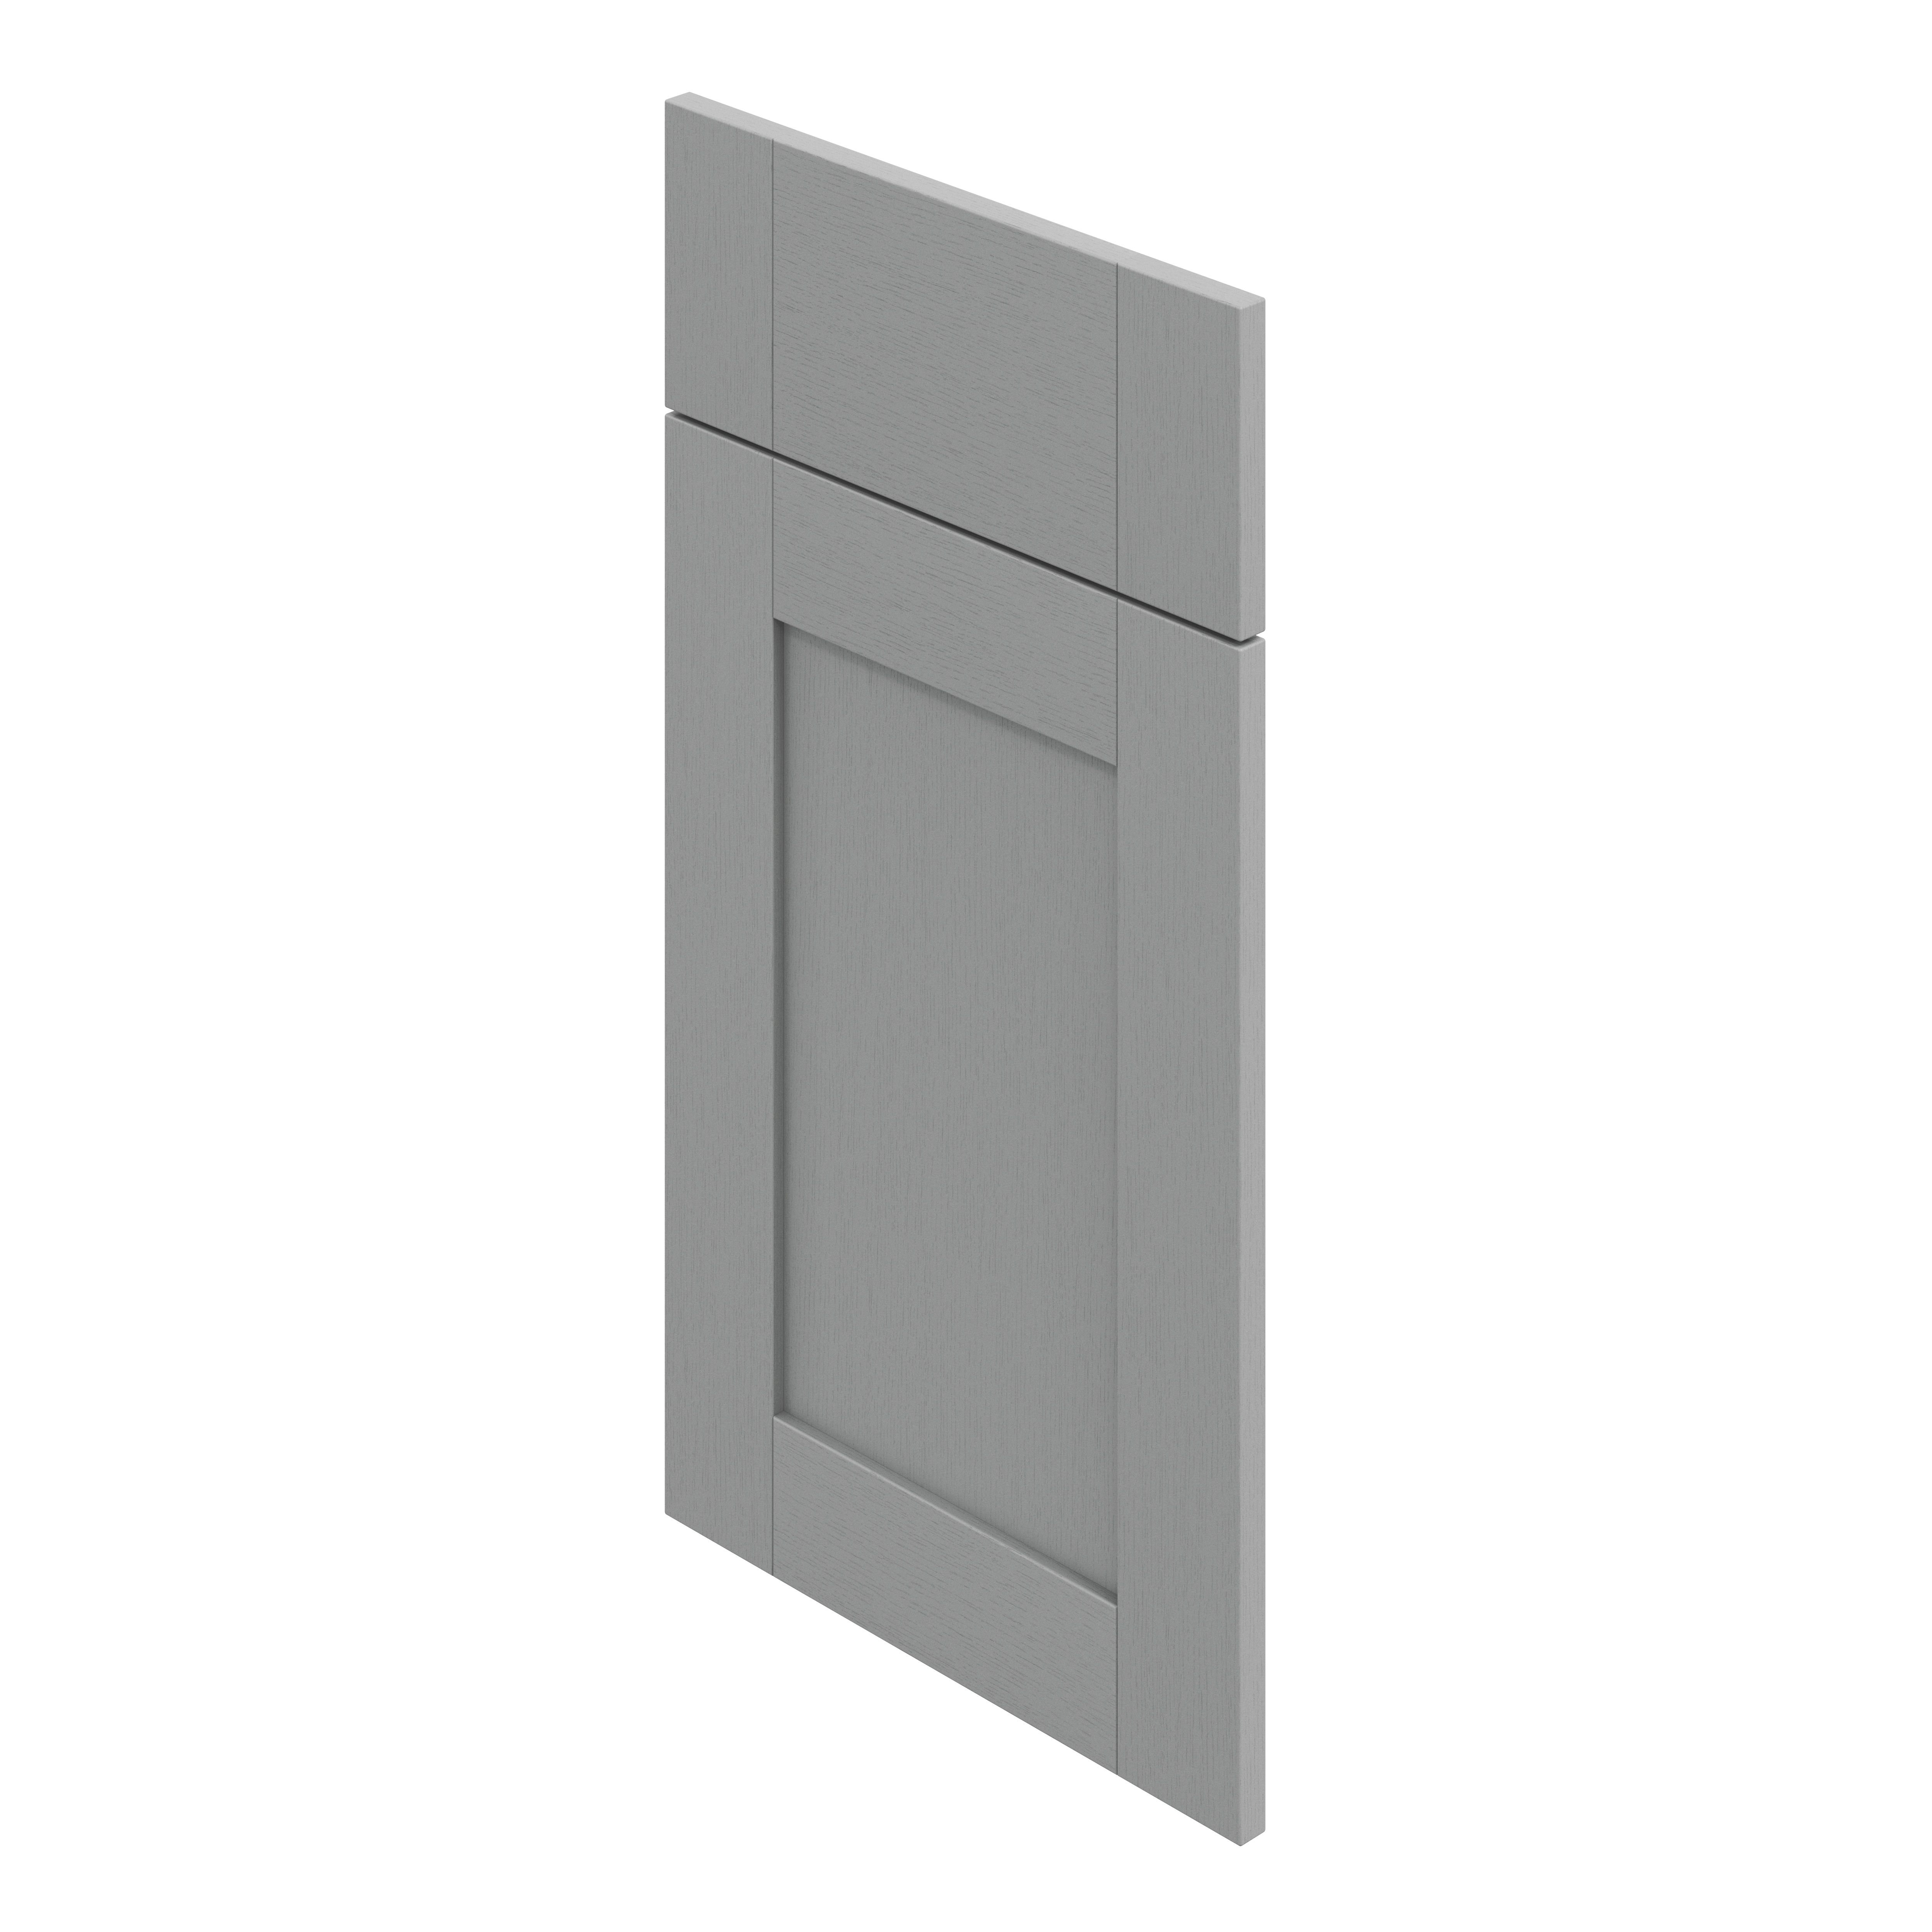 GoodHome Alpinia Matt Slate Grey Painted Wood Effect Shaker Drawerline door & drawer front, (W)400mm (H)715mm (T)18mm